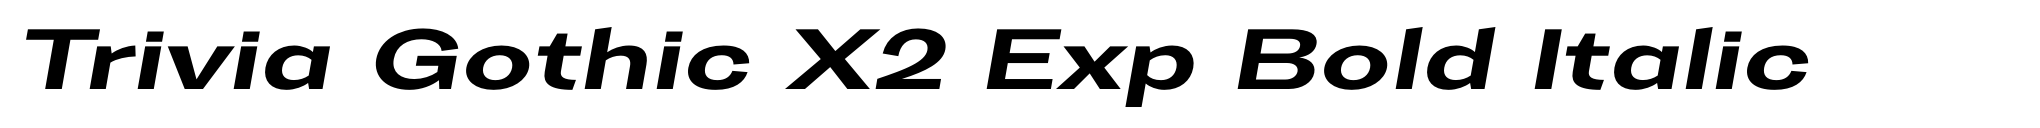 Trivia Gothic X2 Exp Bold Italic image